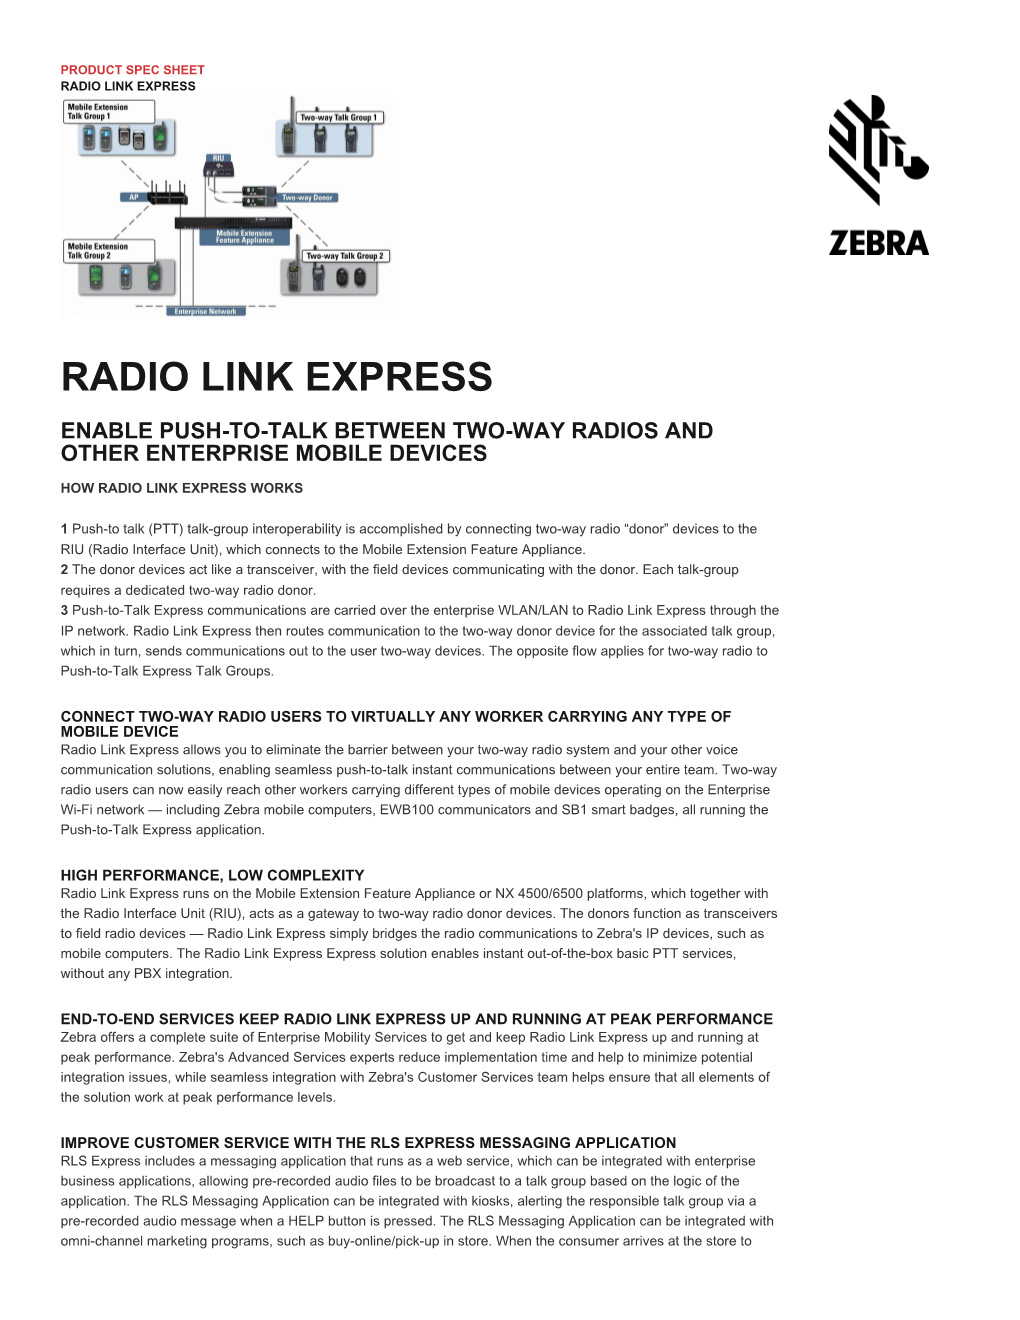 Radio Link Express Spec Sheet